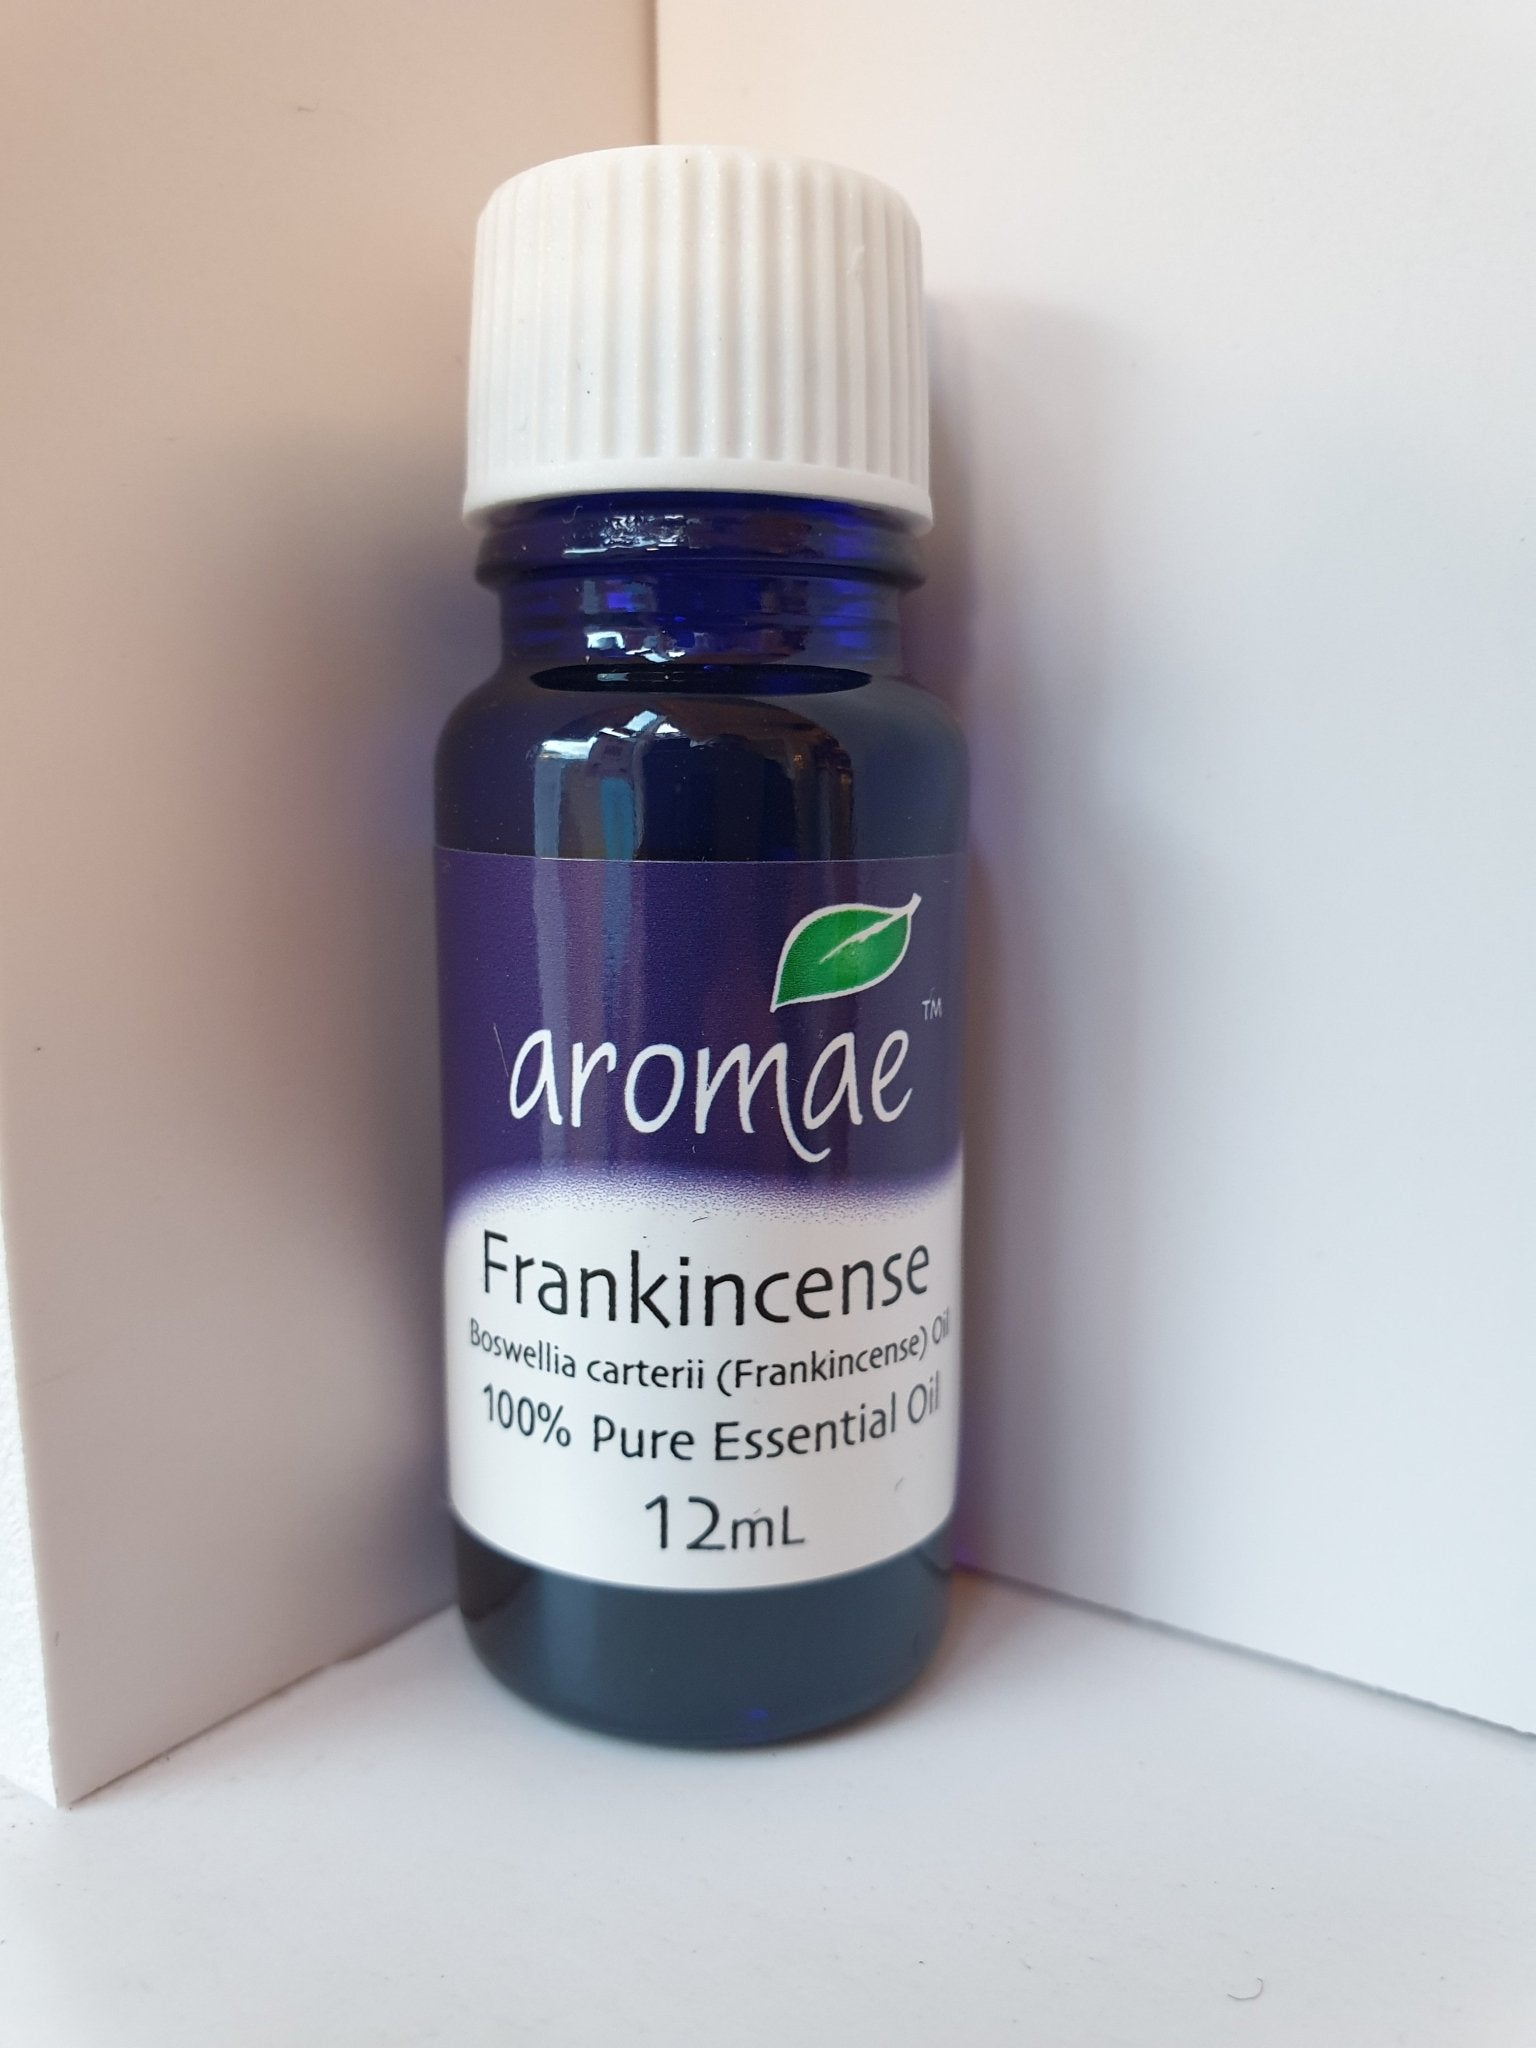 Aromae Frankincense Essential Oil